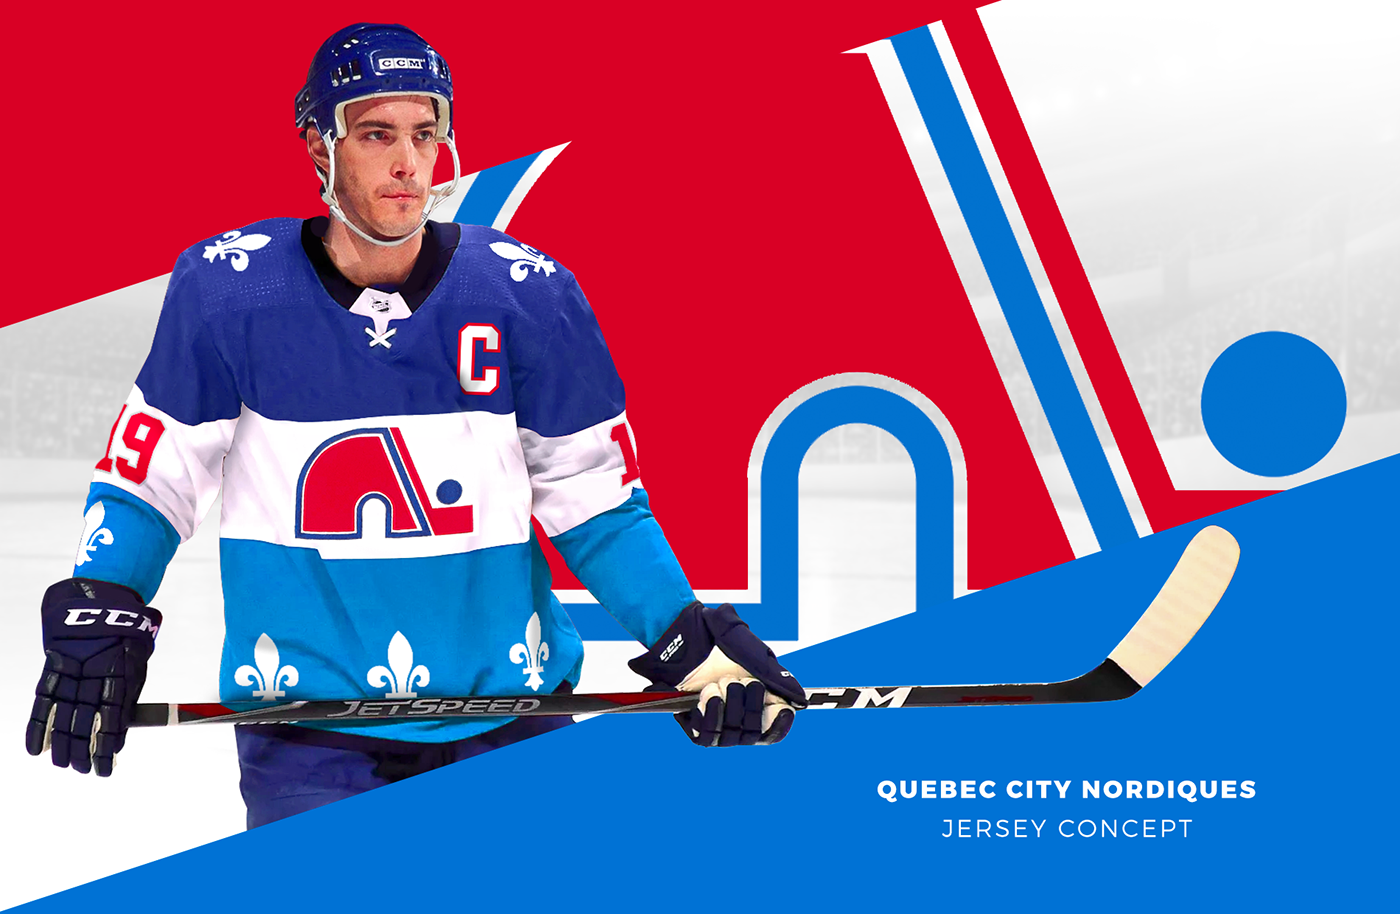 adidas concept hockey jersey NHL Nordiques quebec city Quebec city nordiques Sakic